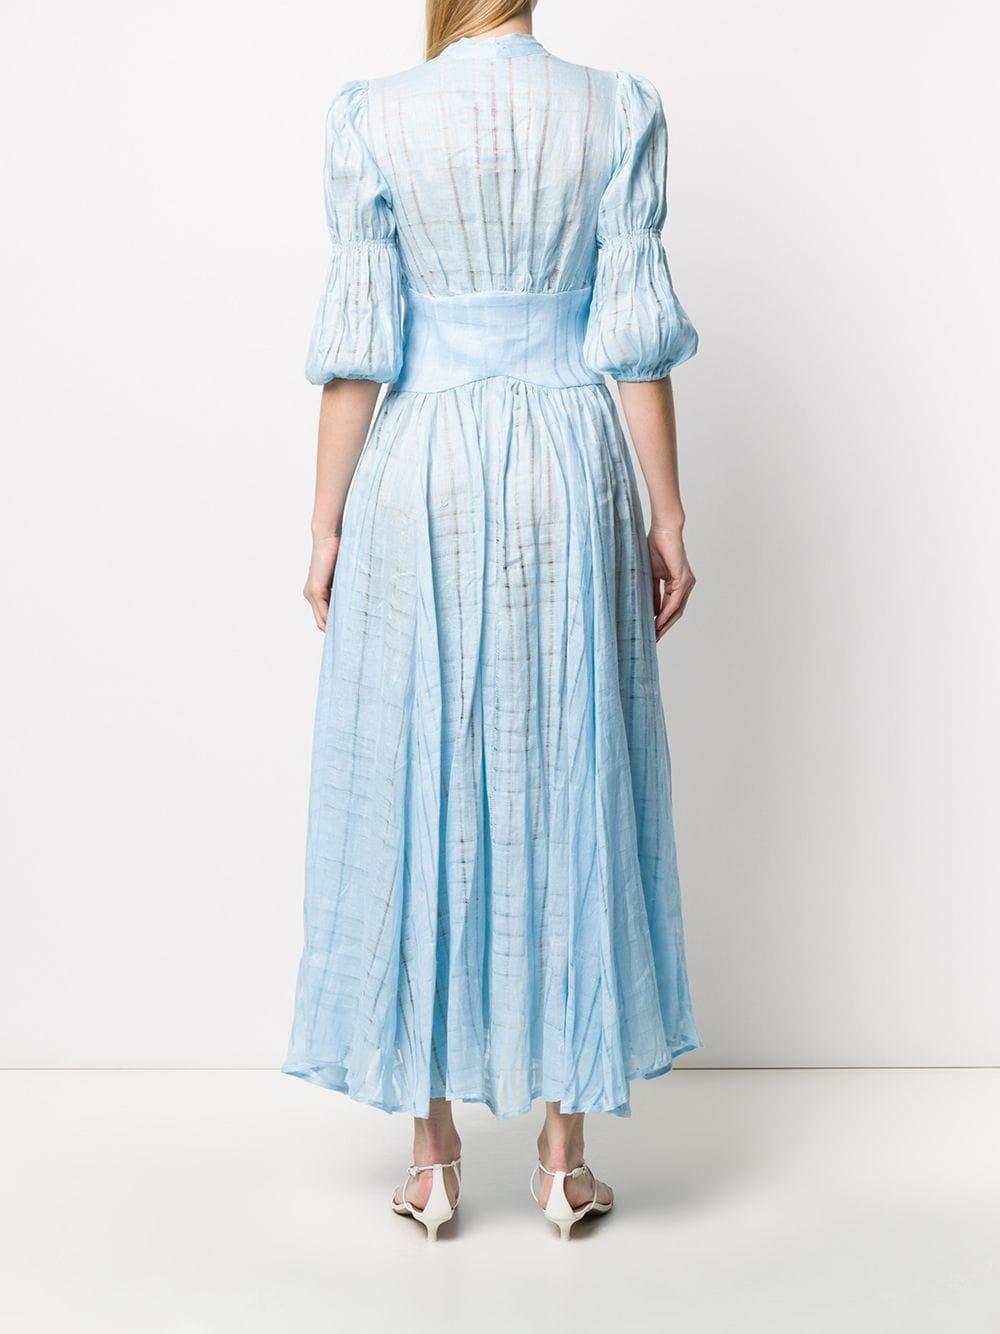 Cult Gaia Linen Willow Buttoned Dress in Blue - Lyst